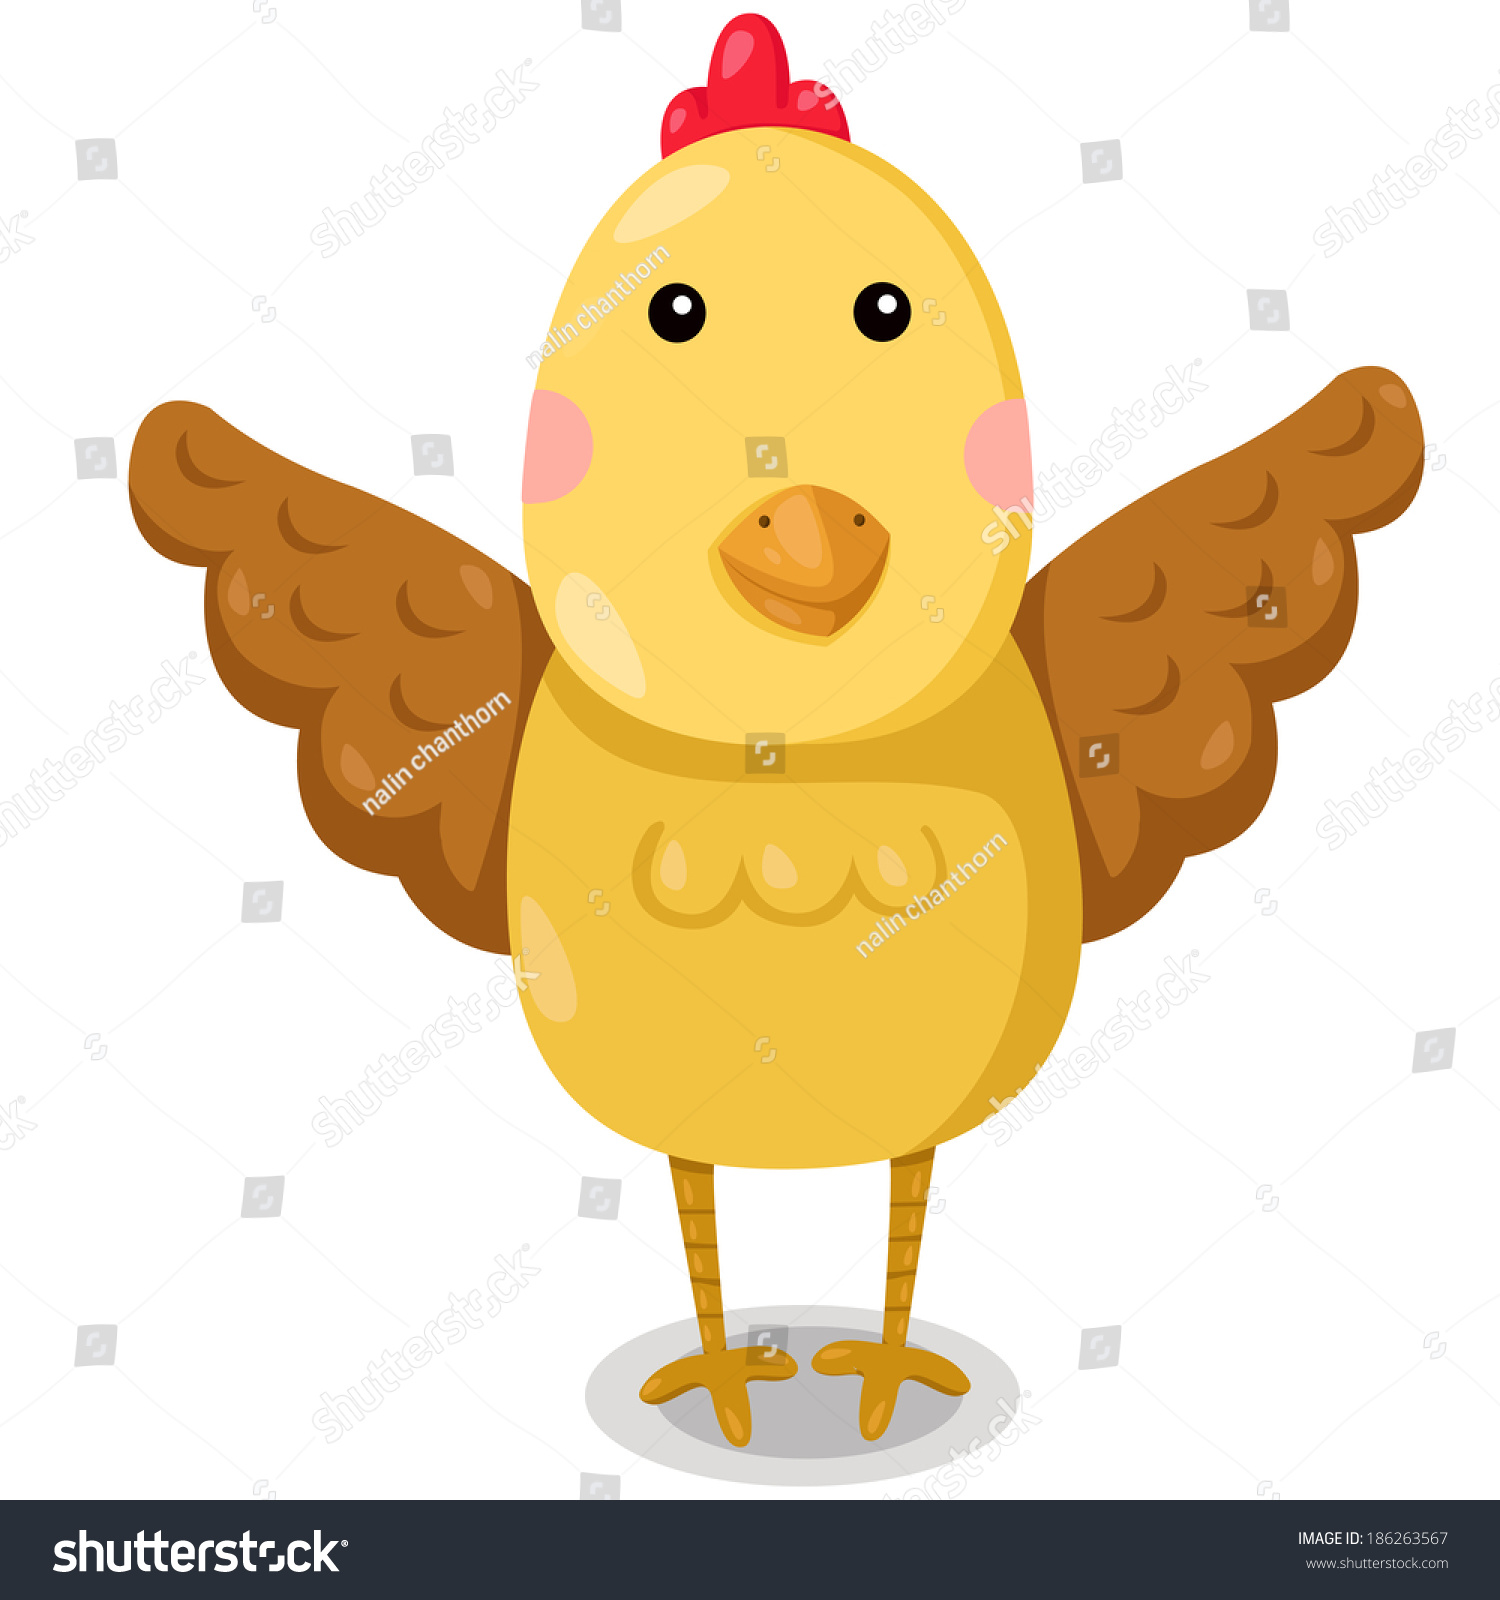 Illustrator Chicken Cute Vector Stock Vector Royalty Free